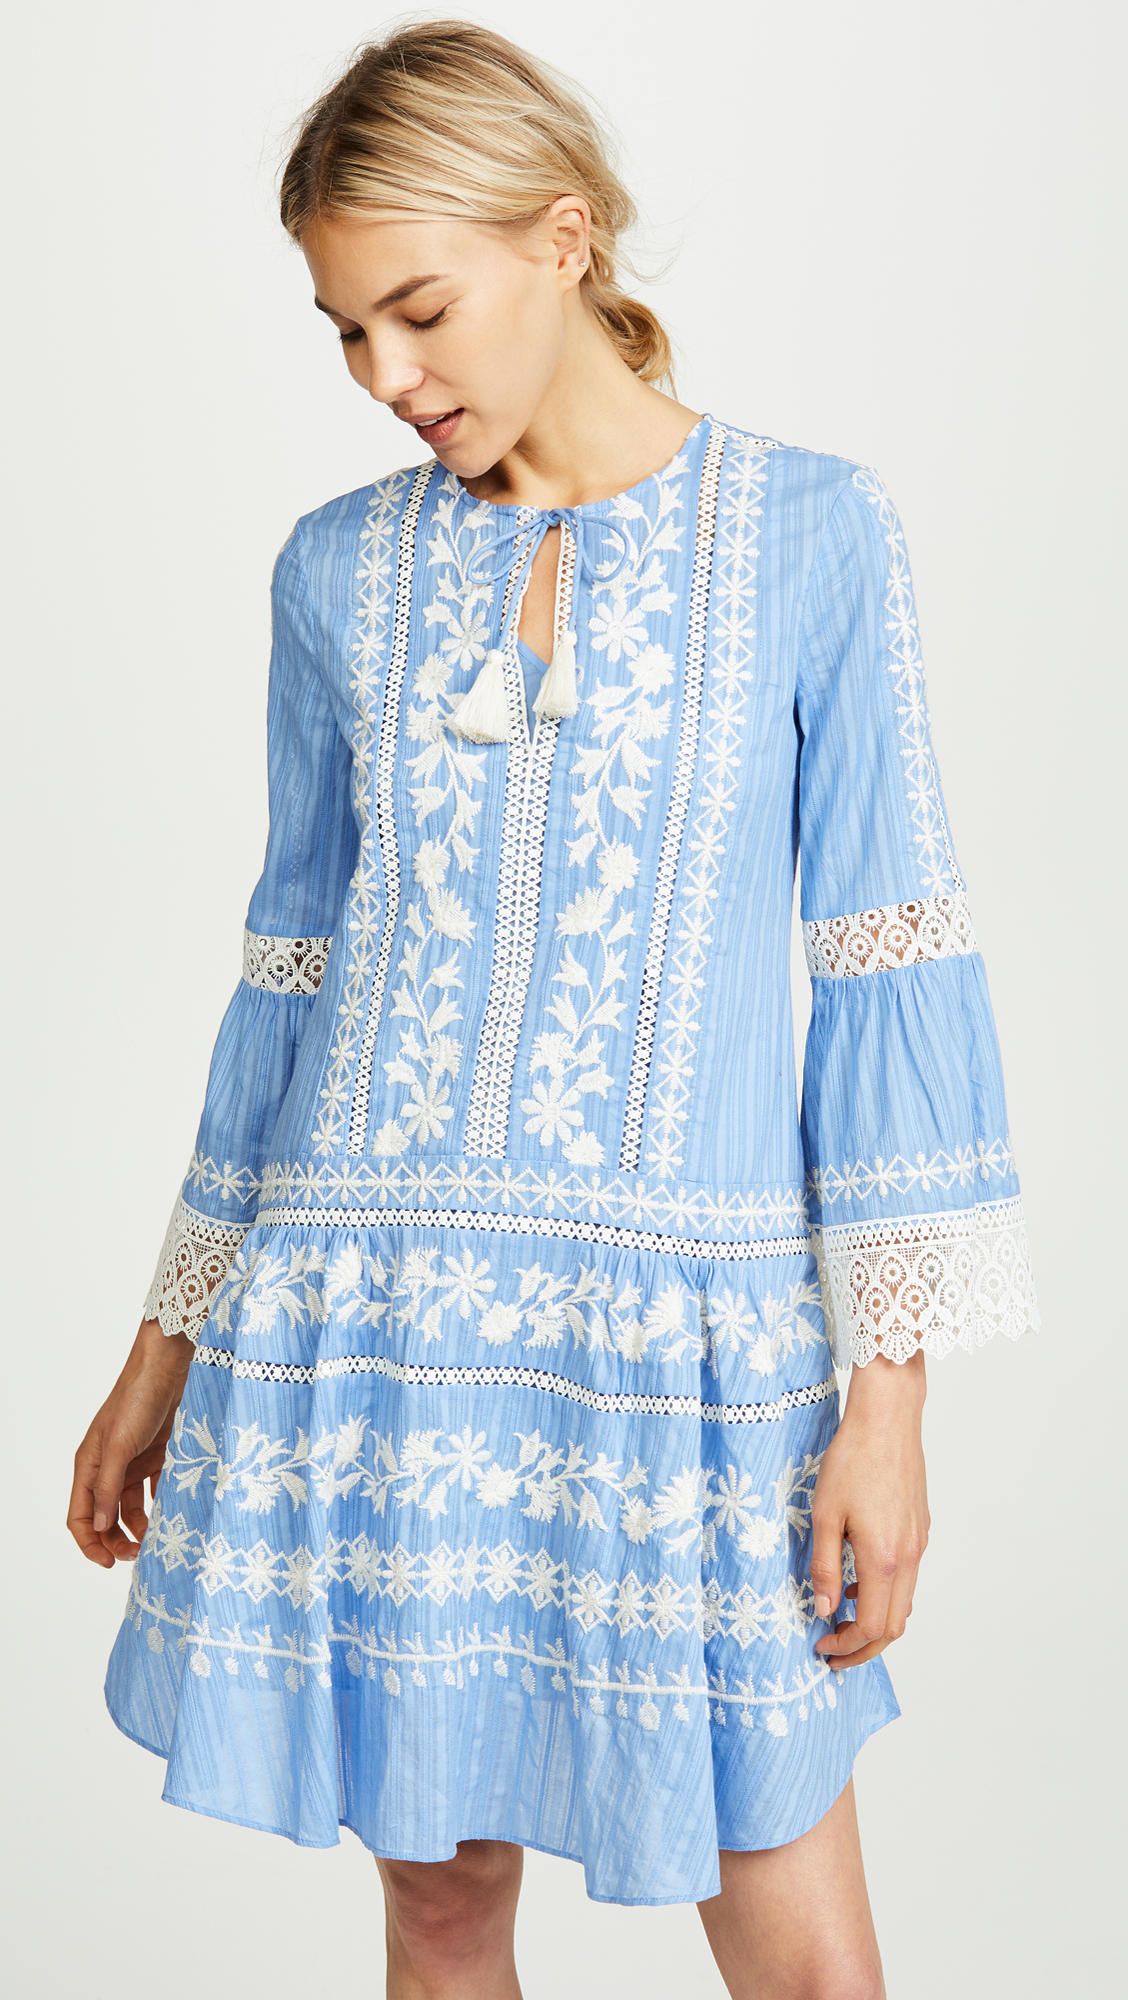 blue-white-gabriella-dress-tory-burch-lace